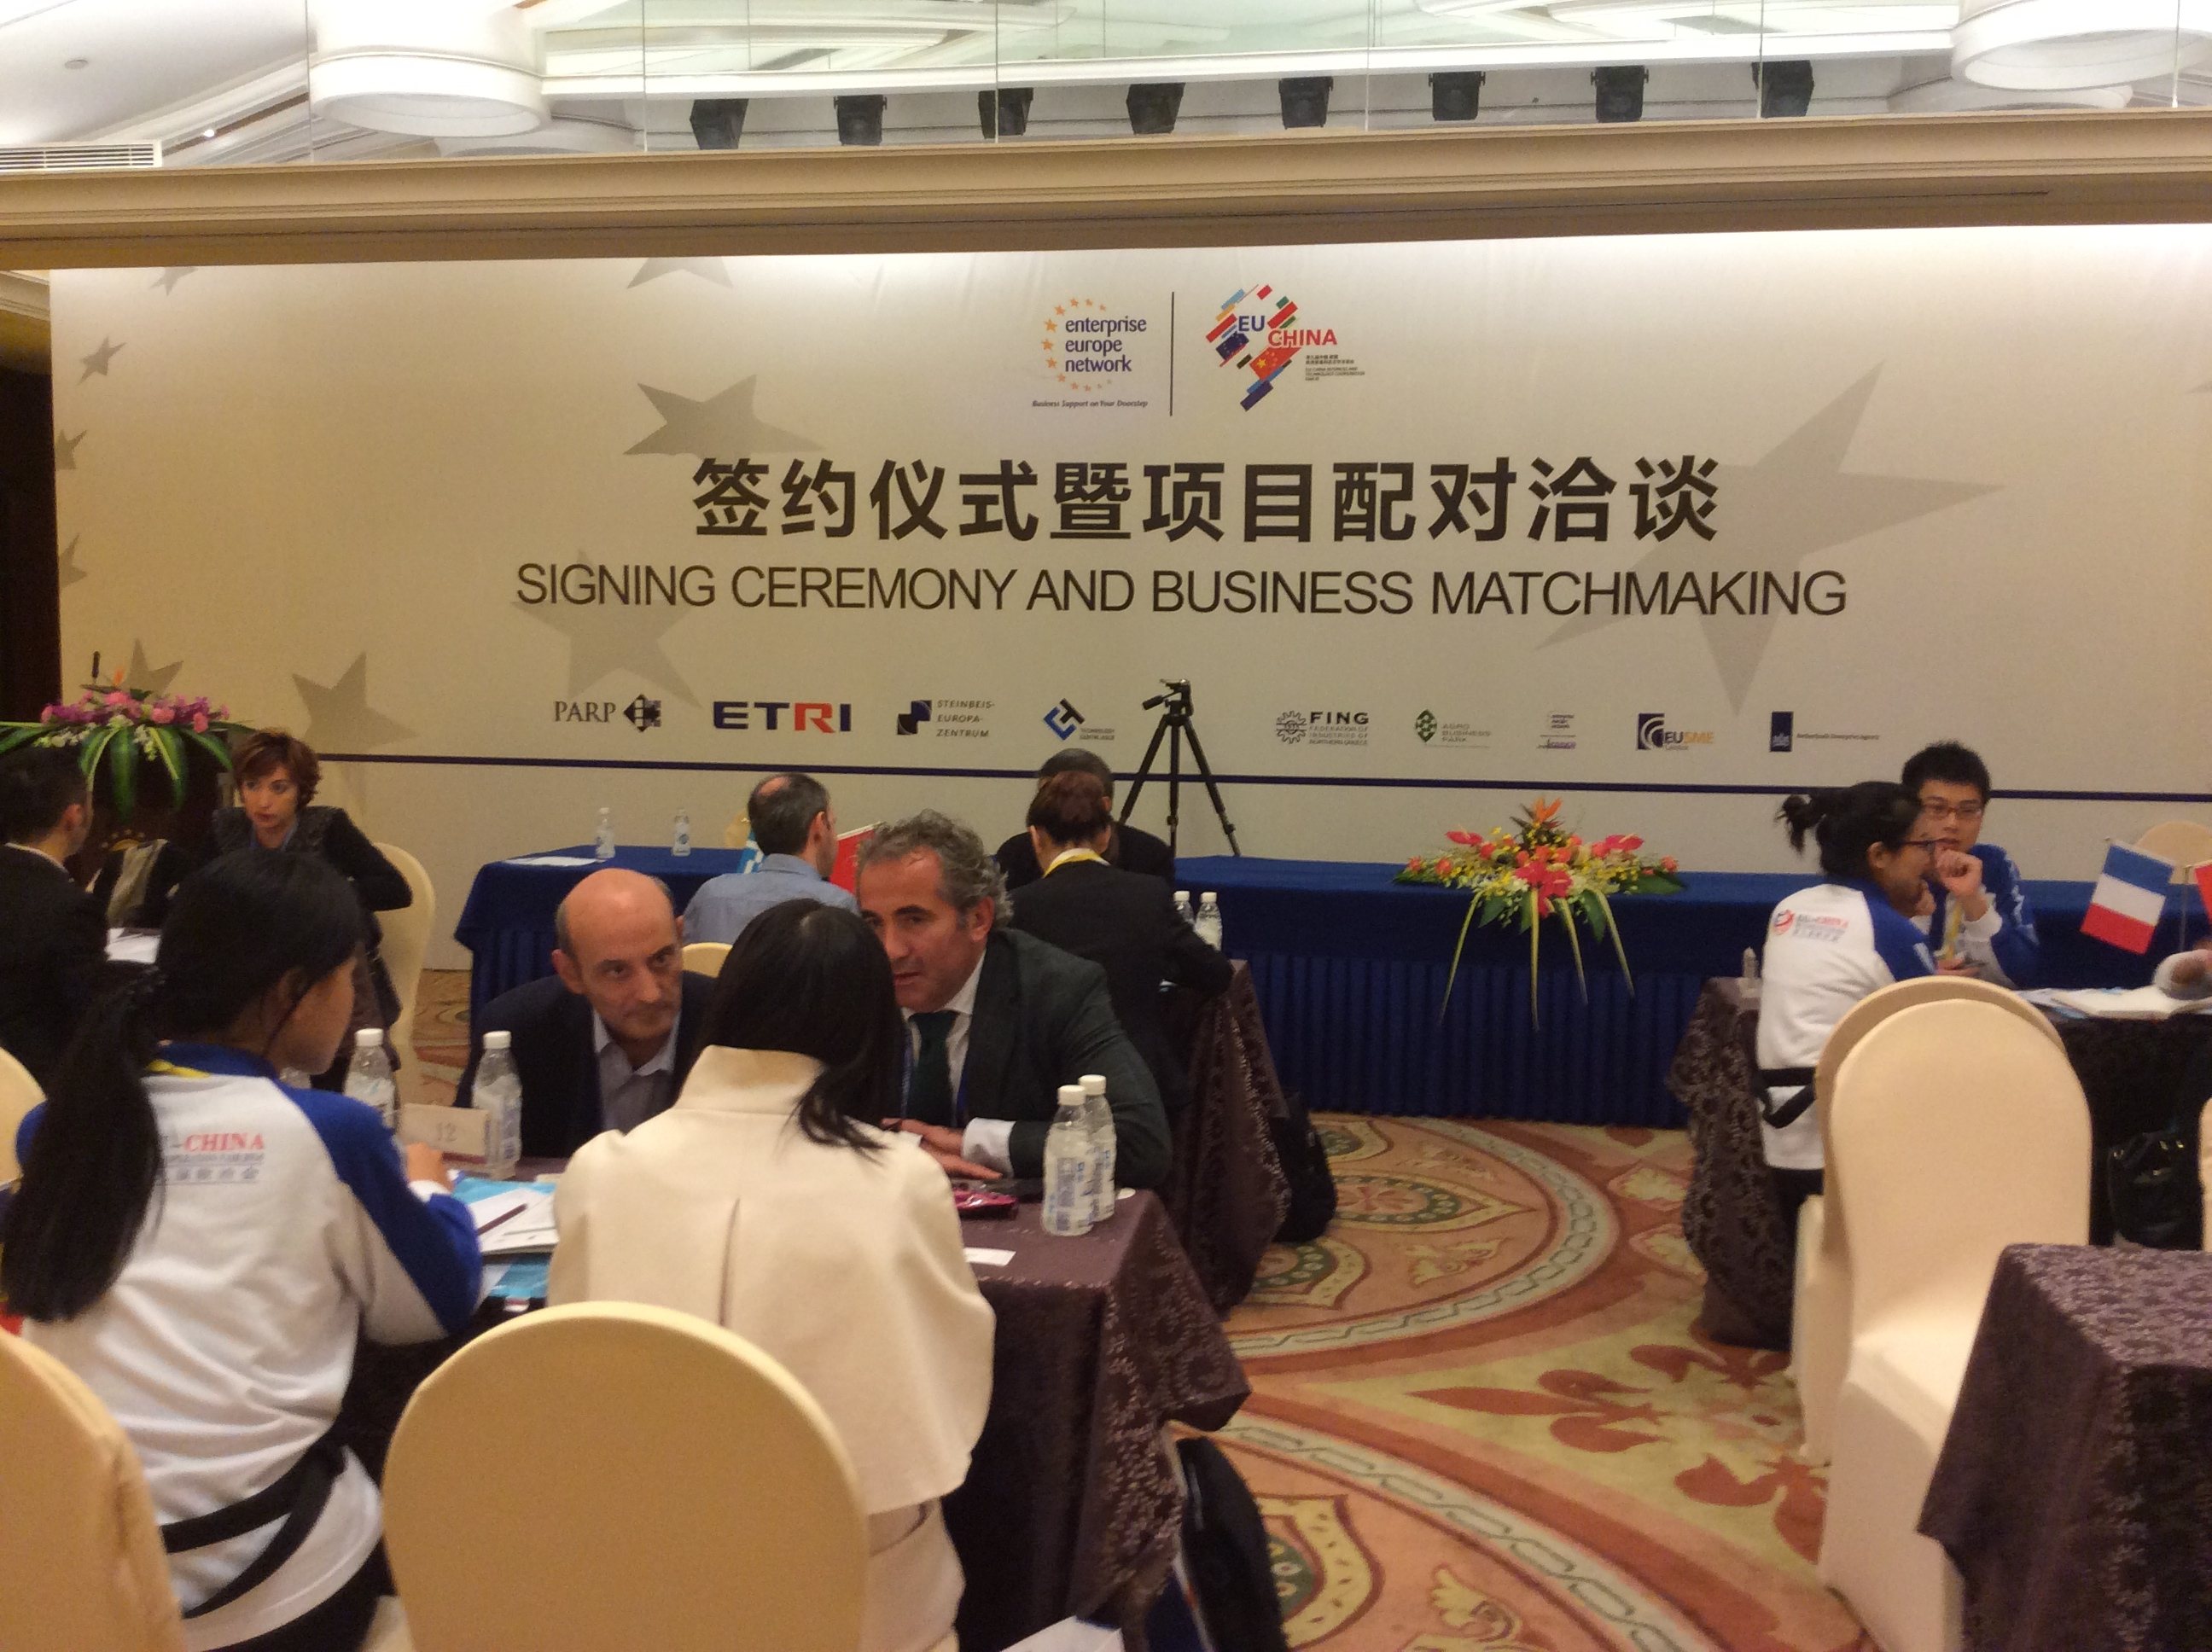 EU-China Business & Technology Cooperation Fair